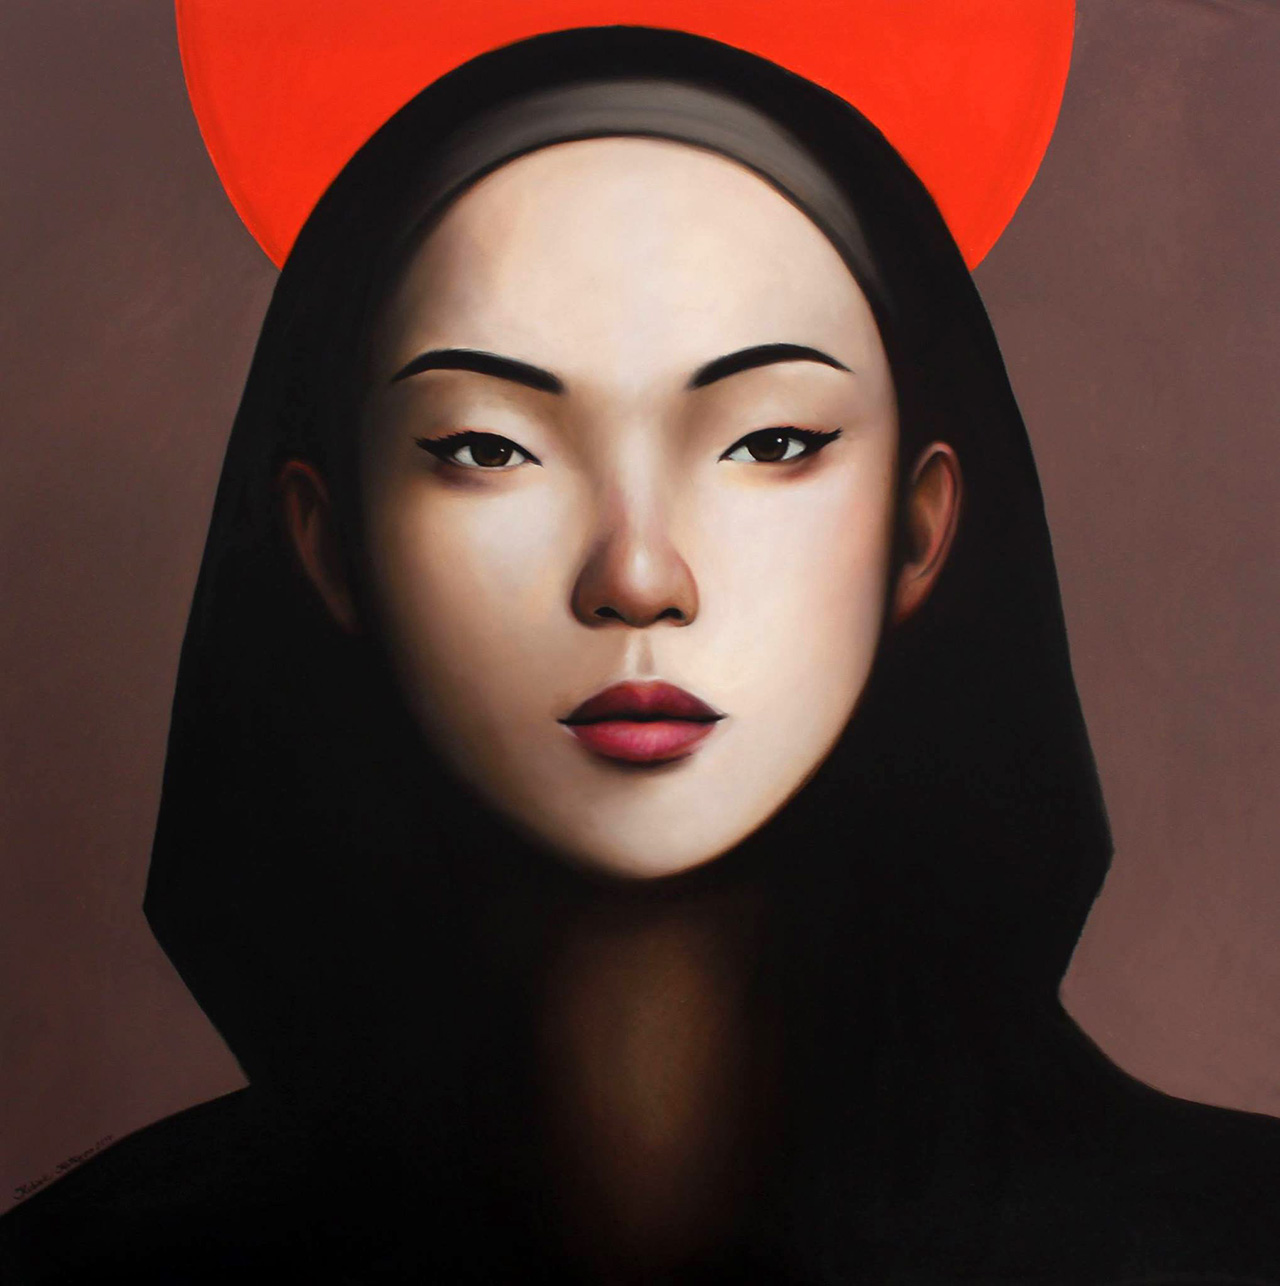 Katarzyna Kubiak - Japanese girl with a red halo (Oil on Canvas | Größe: 106 x 106 cm | Preis: 5500 PLN)